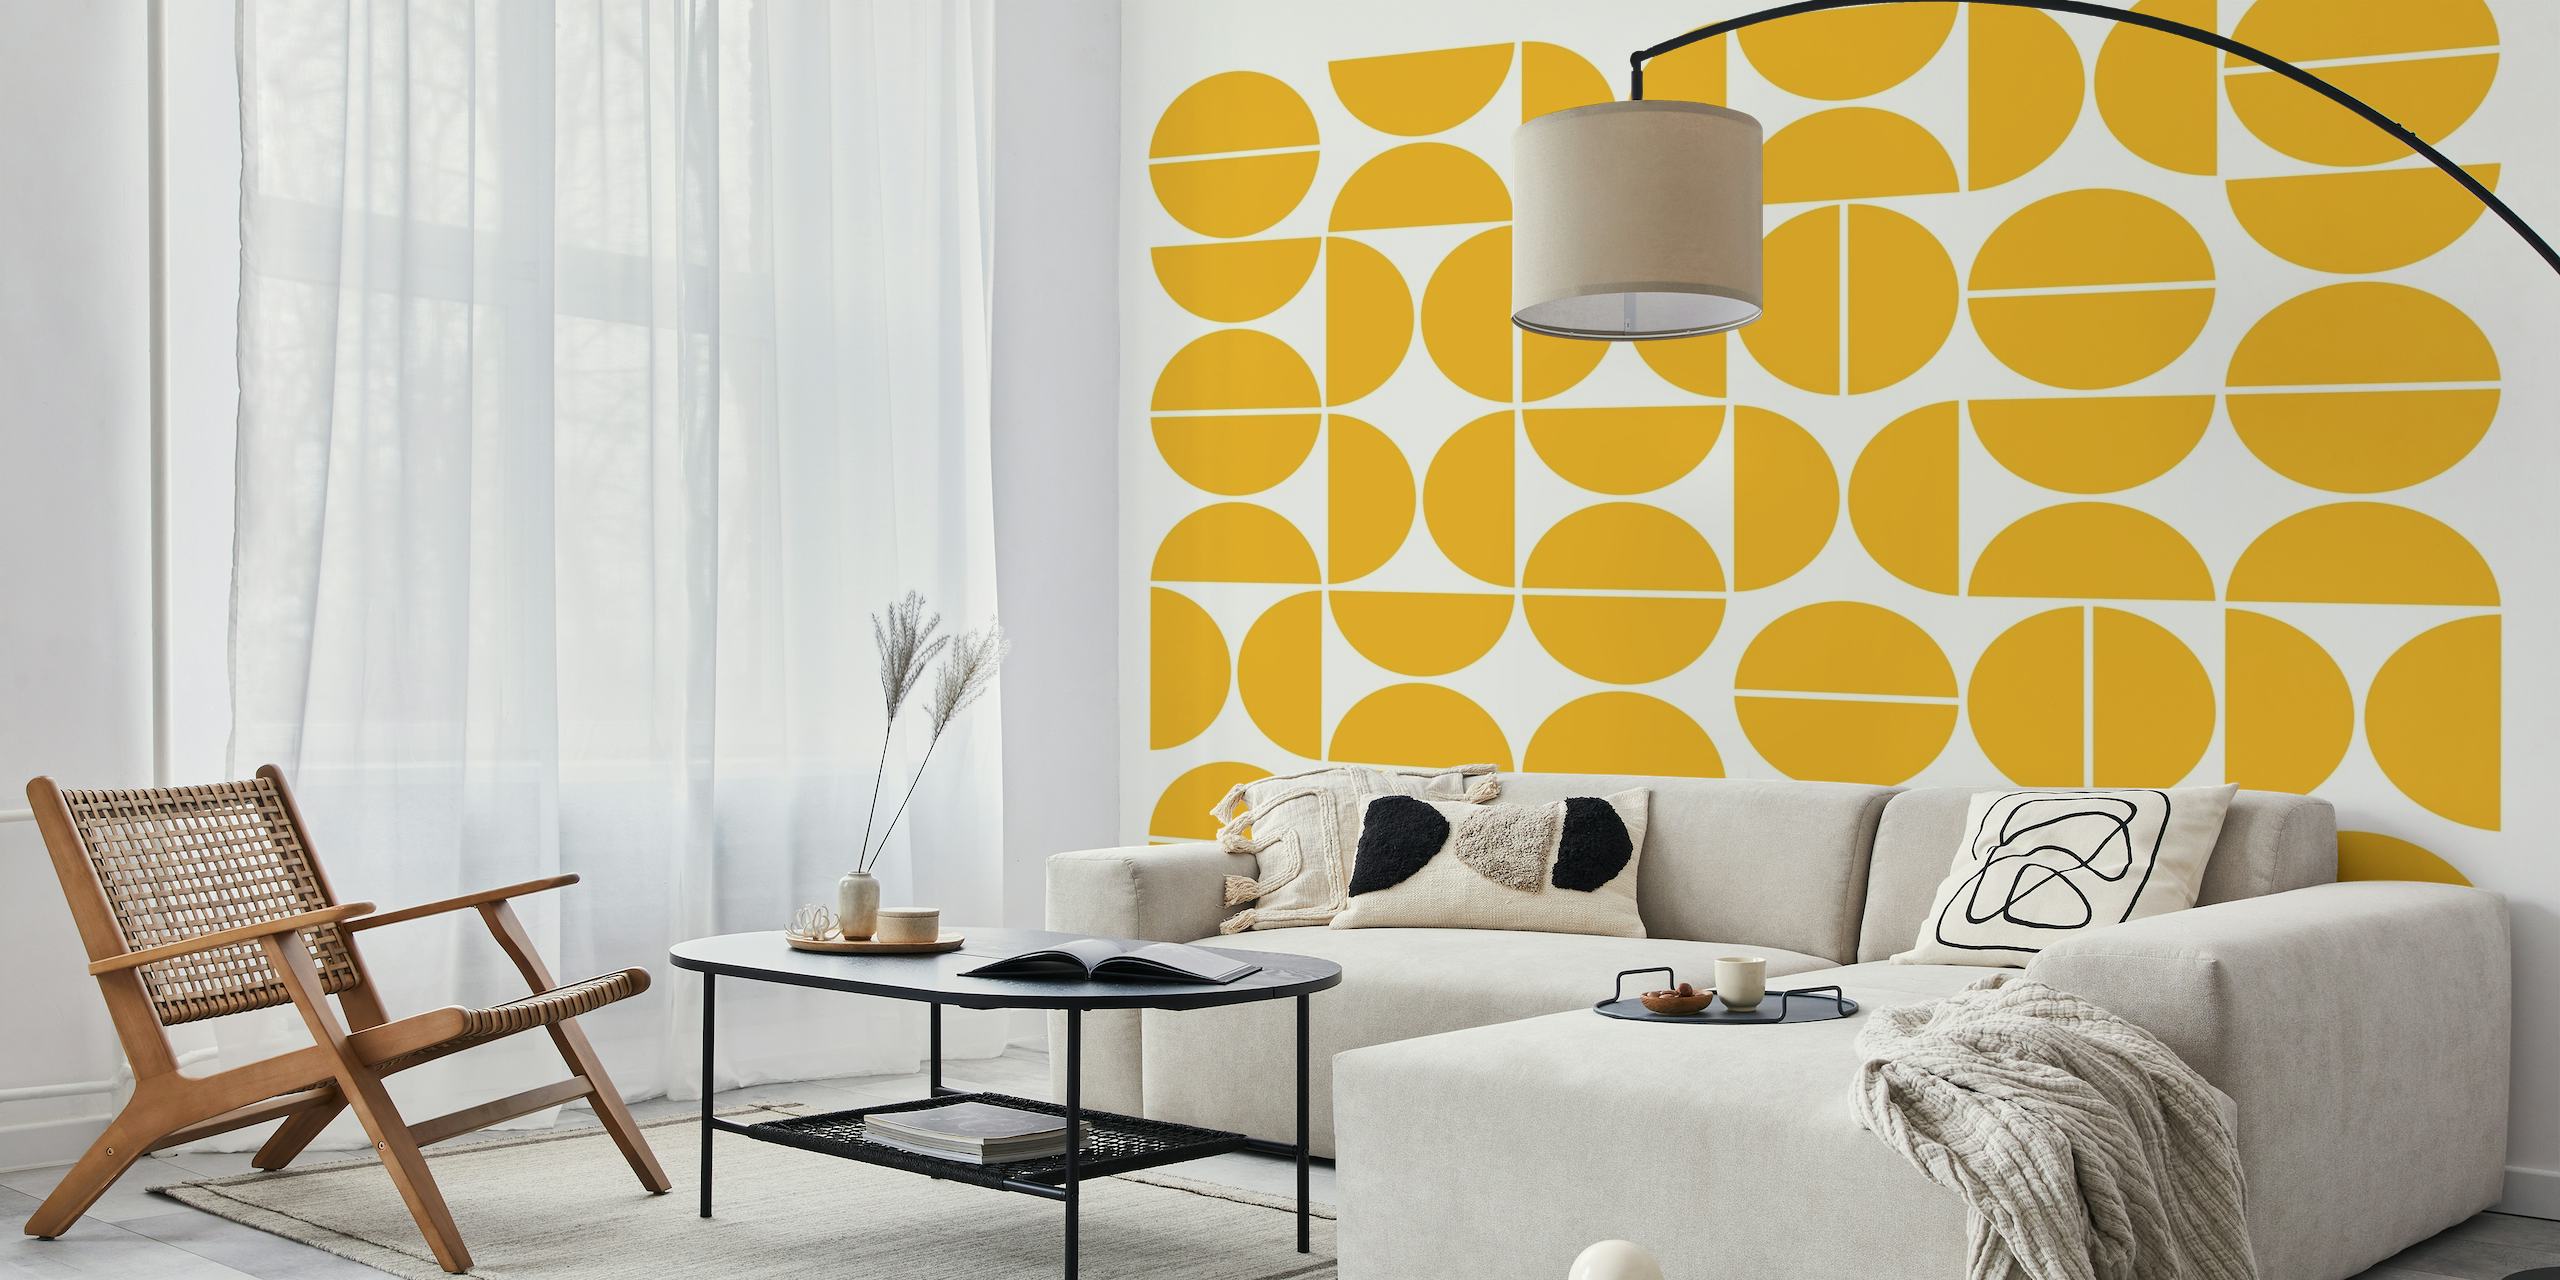 Vibrant Yellow Wallpaper featuring Mid-Century Modern Bauhaus Pattern